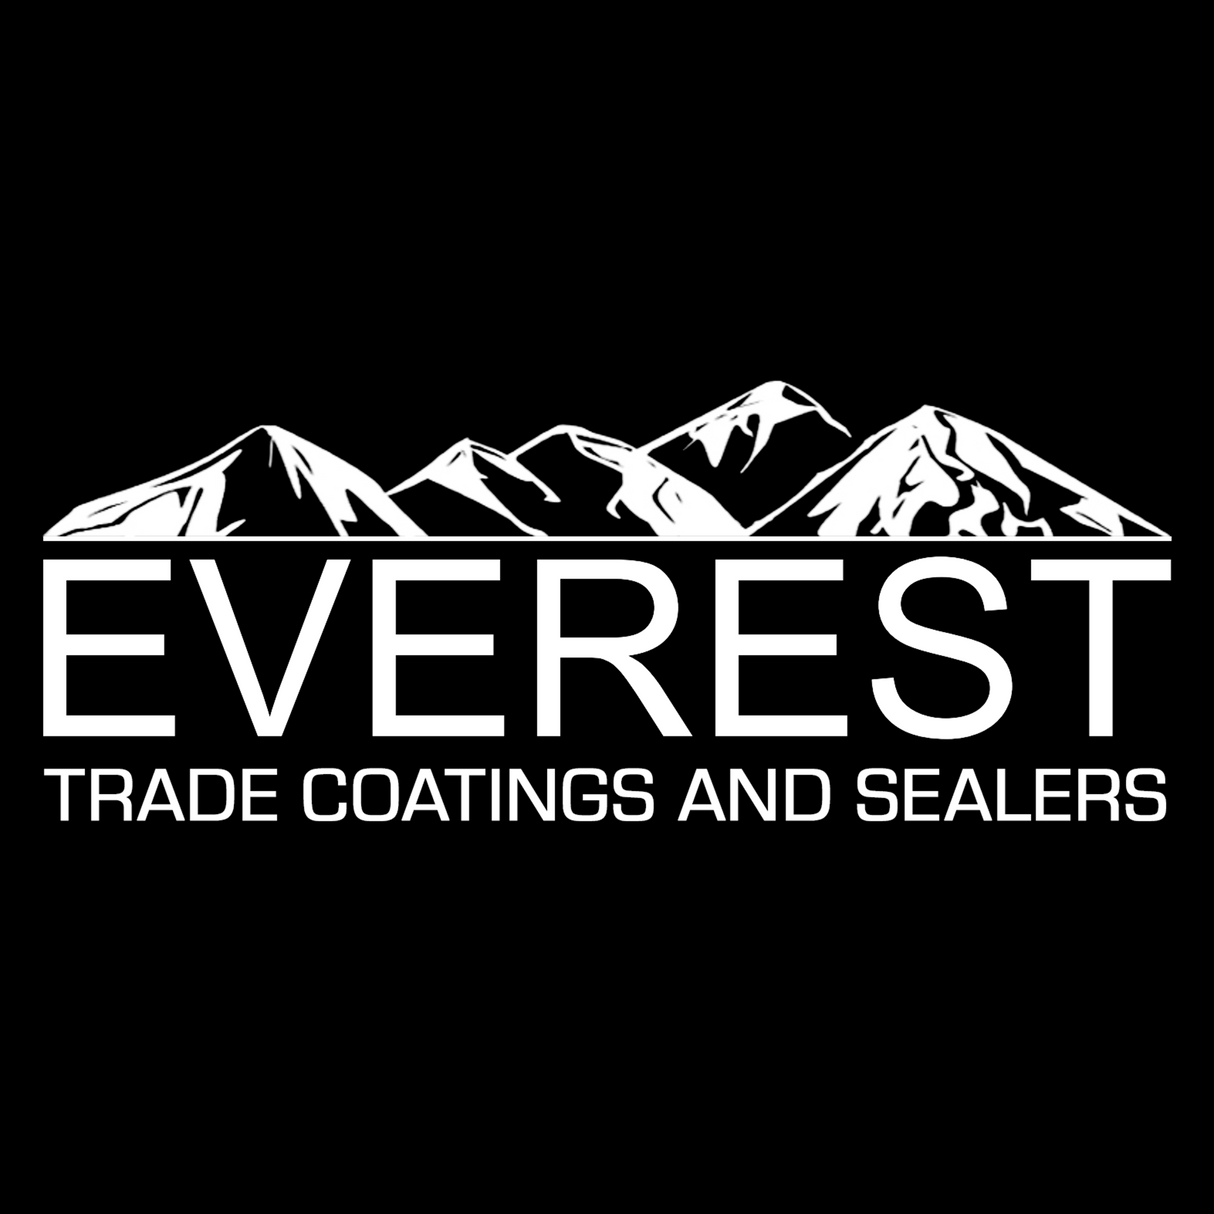 Everest Paints - FENCOAT - Ultimate Fence Paint - High Performance